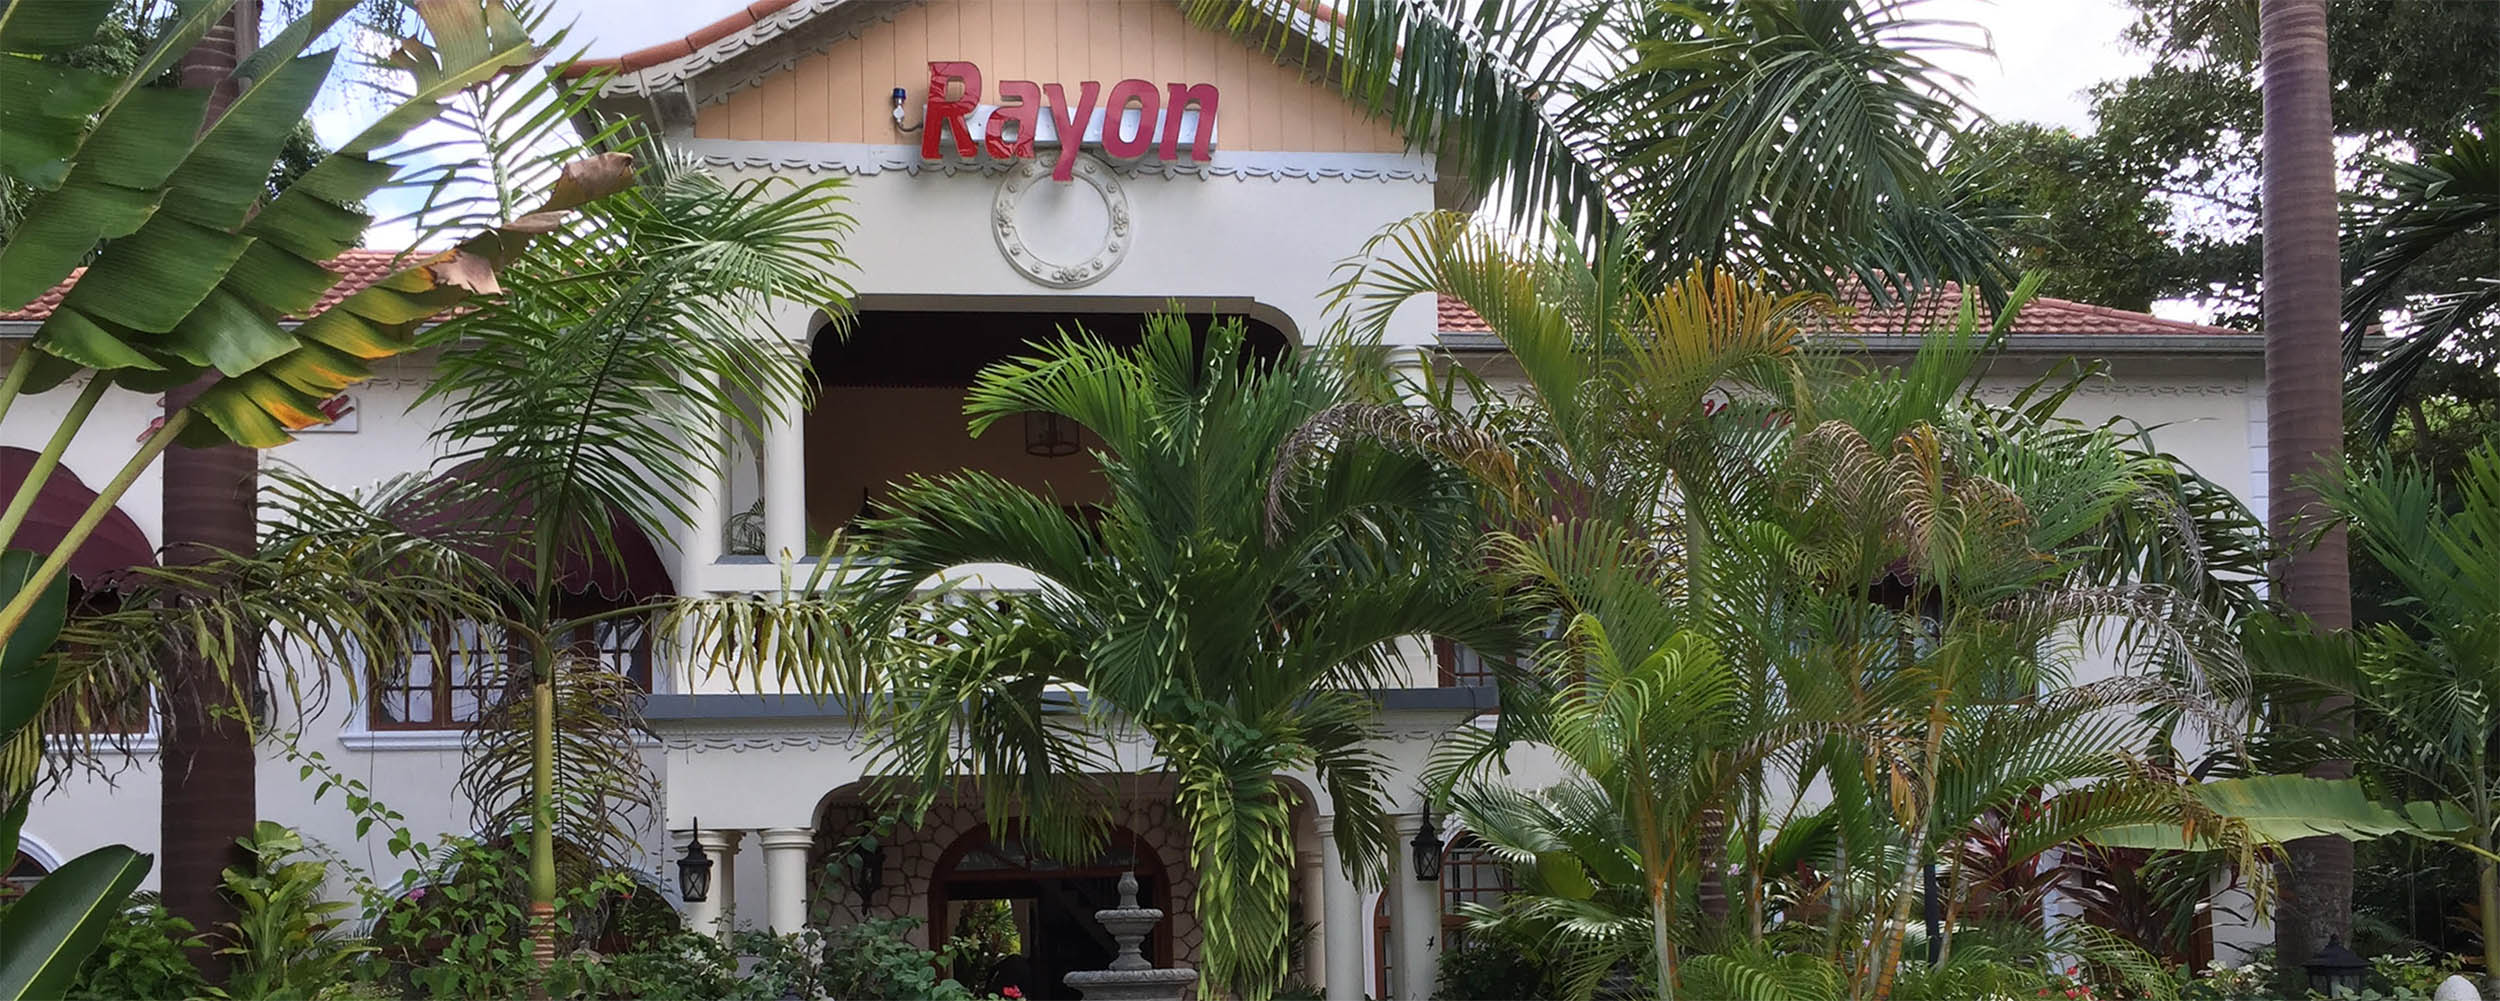 Rayon Hotel - Negril Jamaica